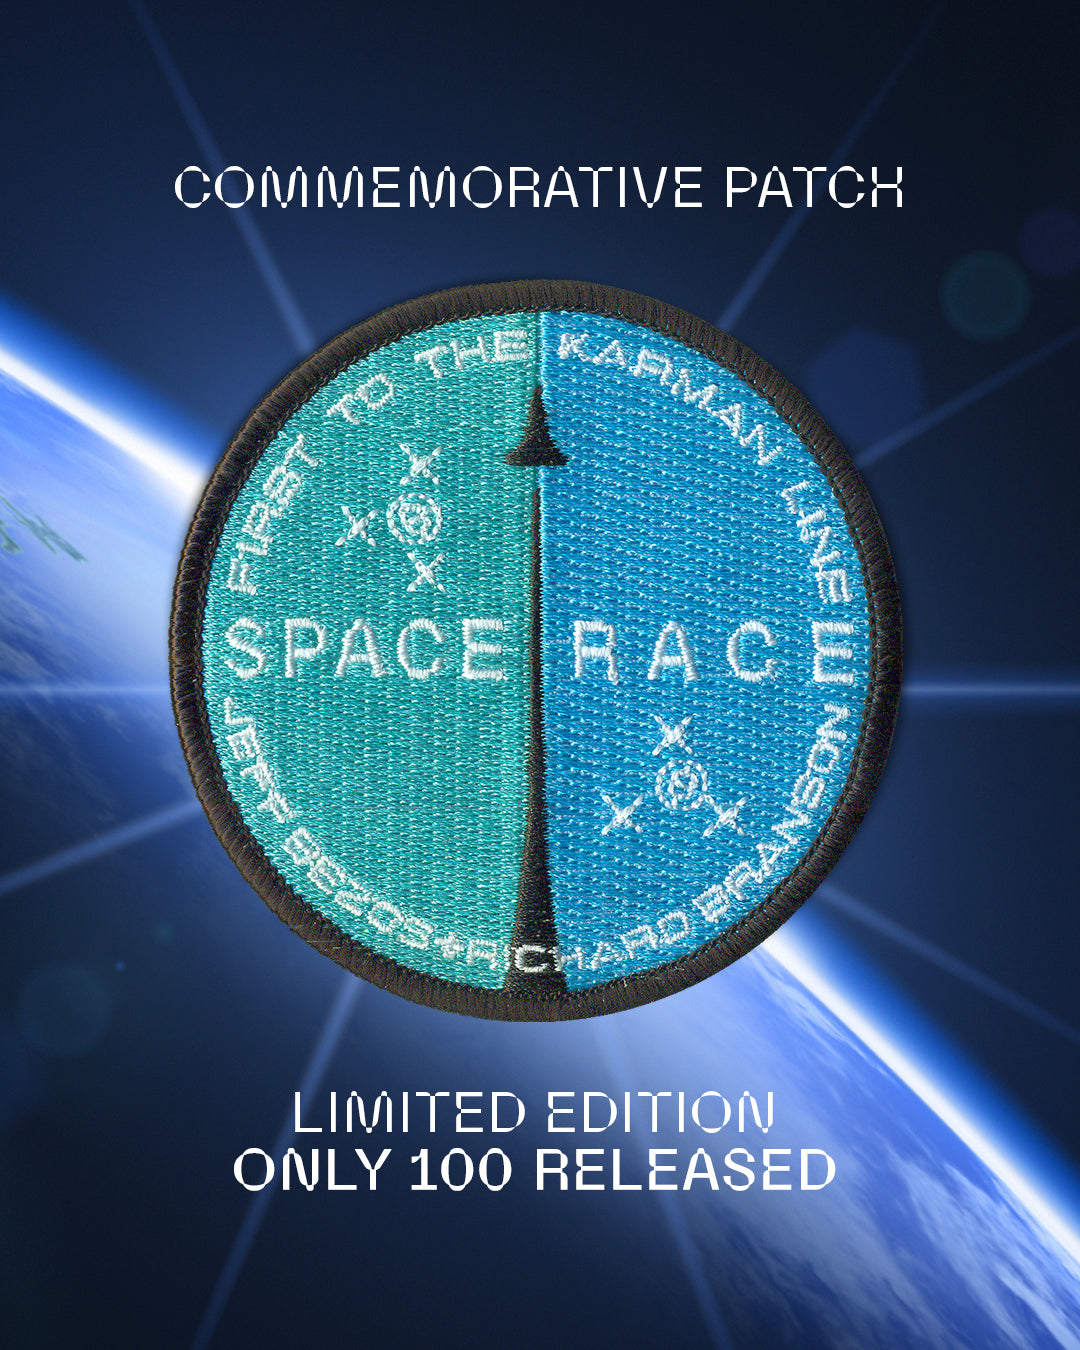 SPACE RACE MISSION PATCH